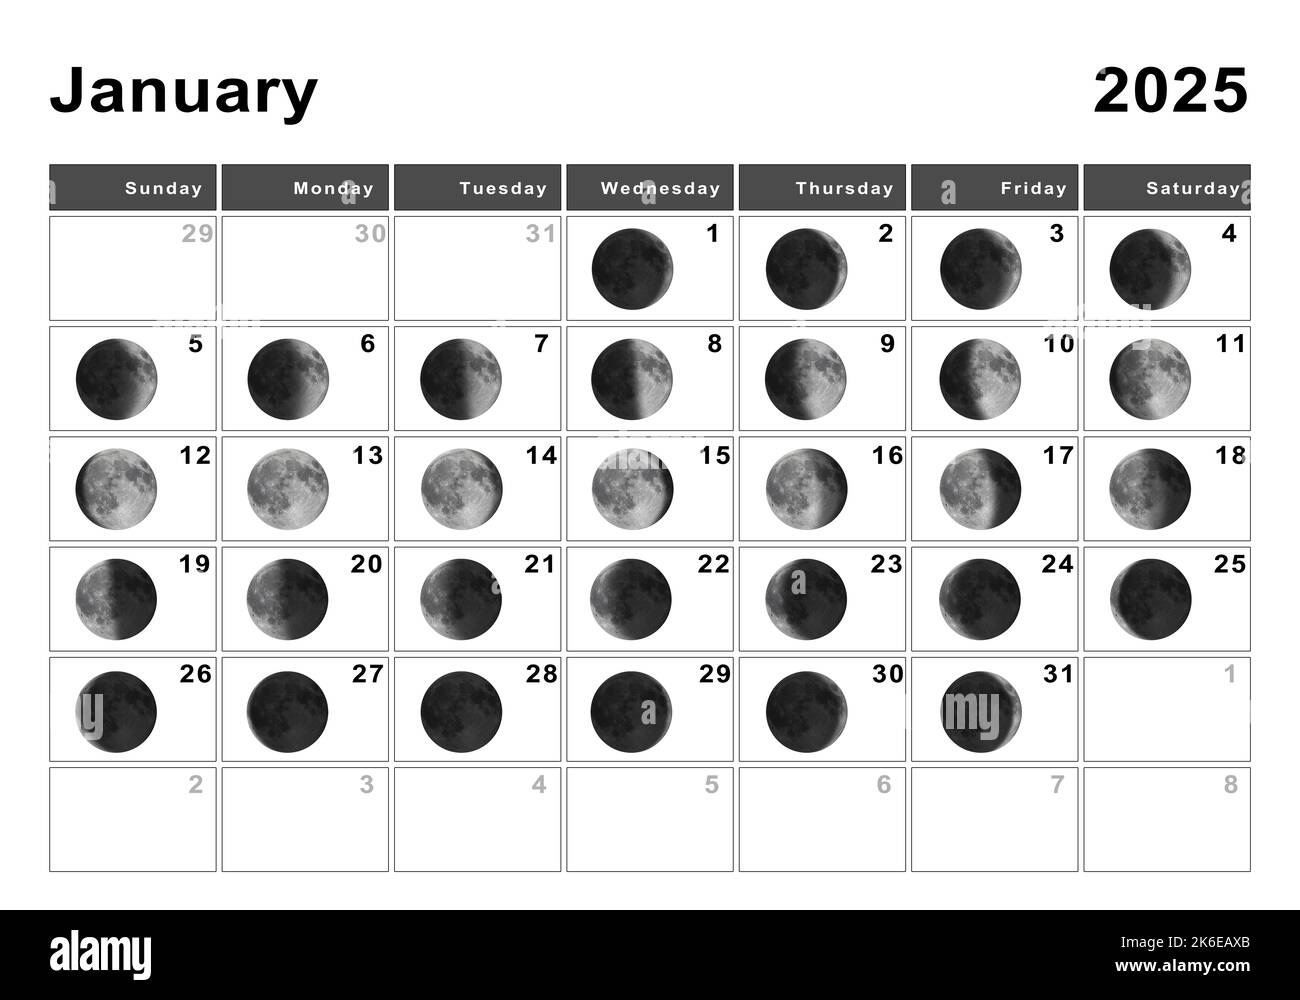 january-2025-lunar-calendar-moon-cycles-moon-phases-stock-photo-alamy